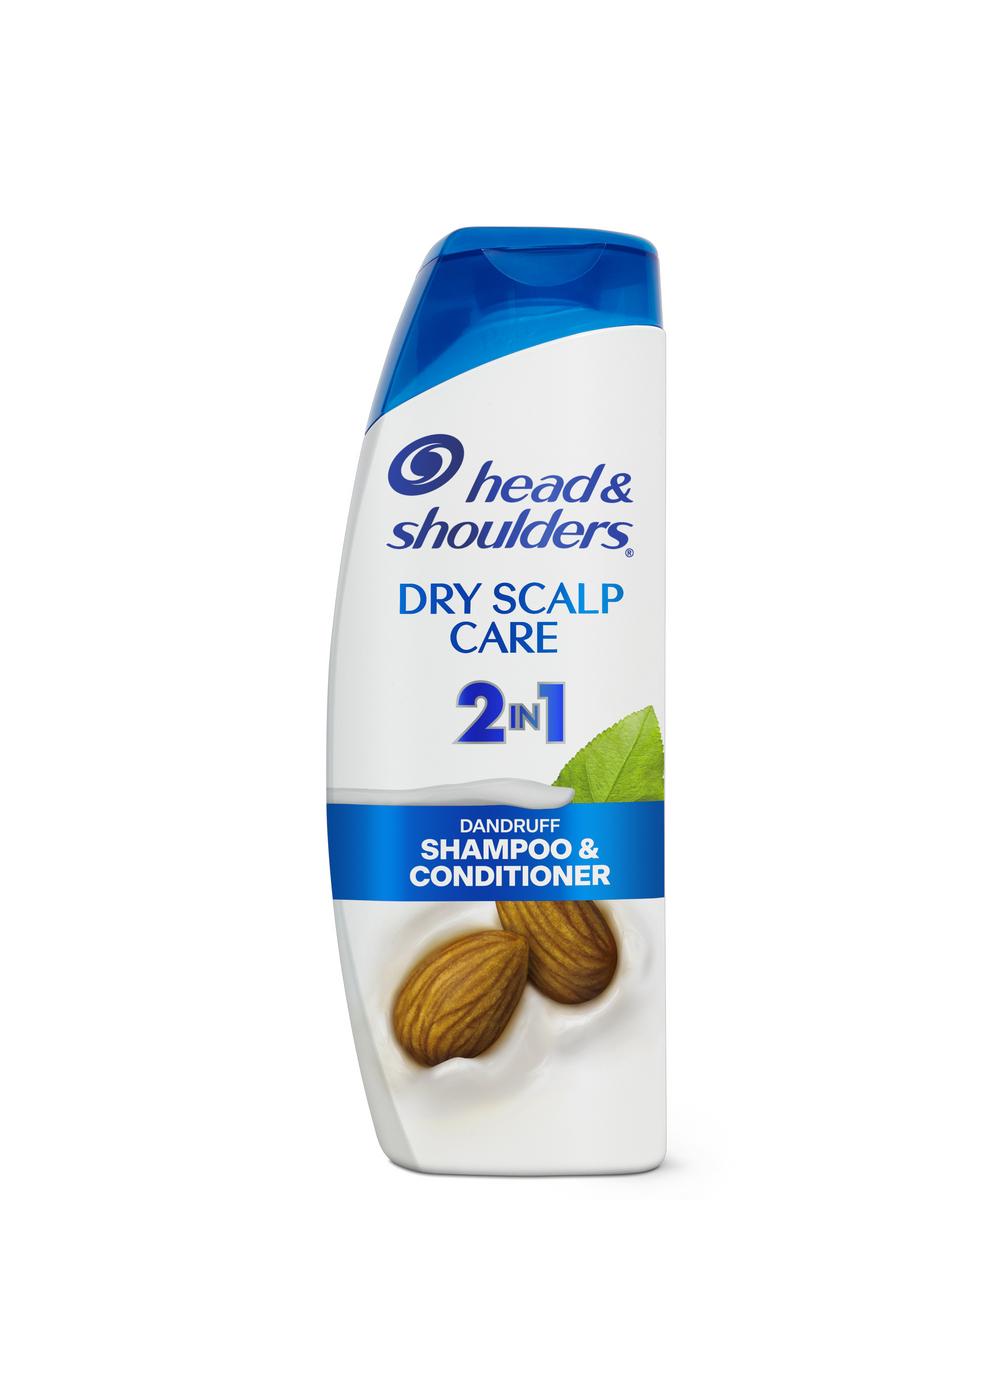 Head & Shoulders 2 in 1 Dandruff Shampoo + Conditioner - Dry Scalp Care; image 3 of 11